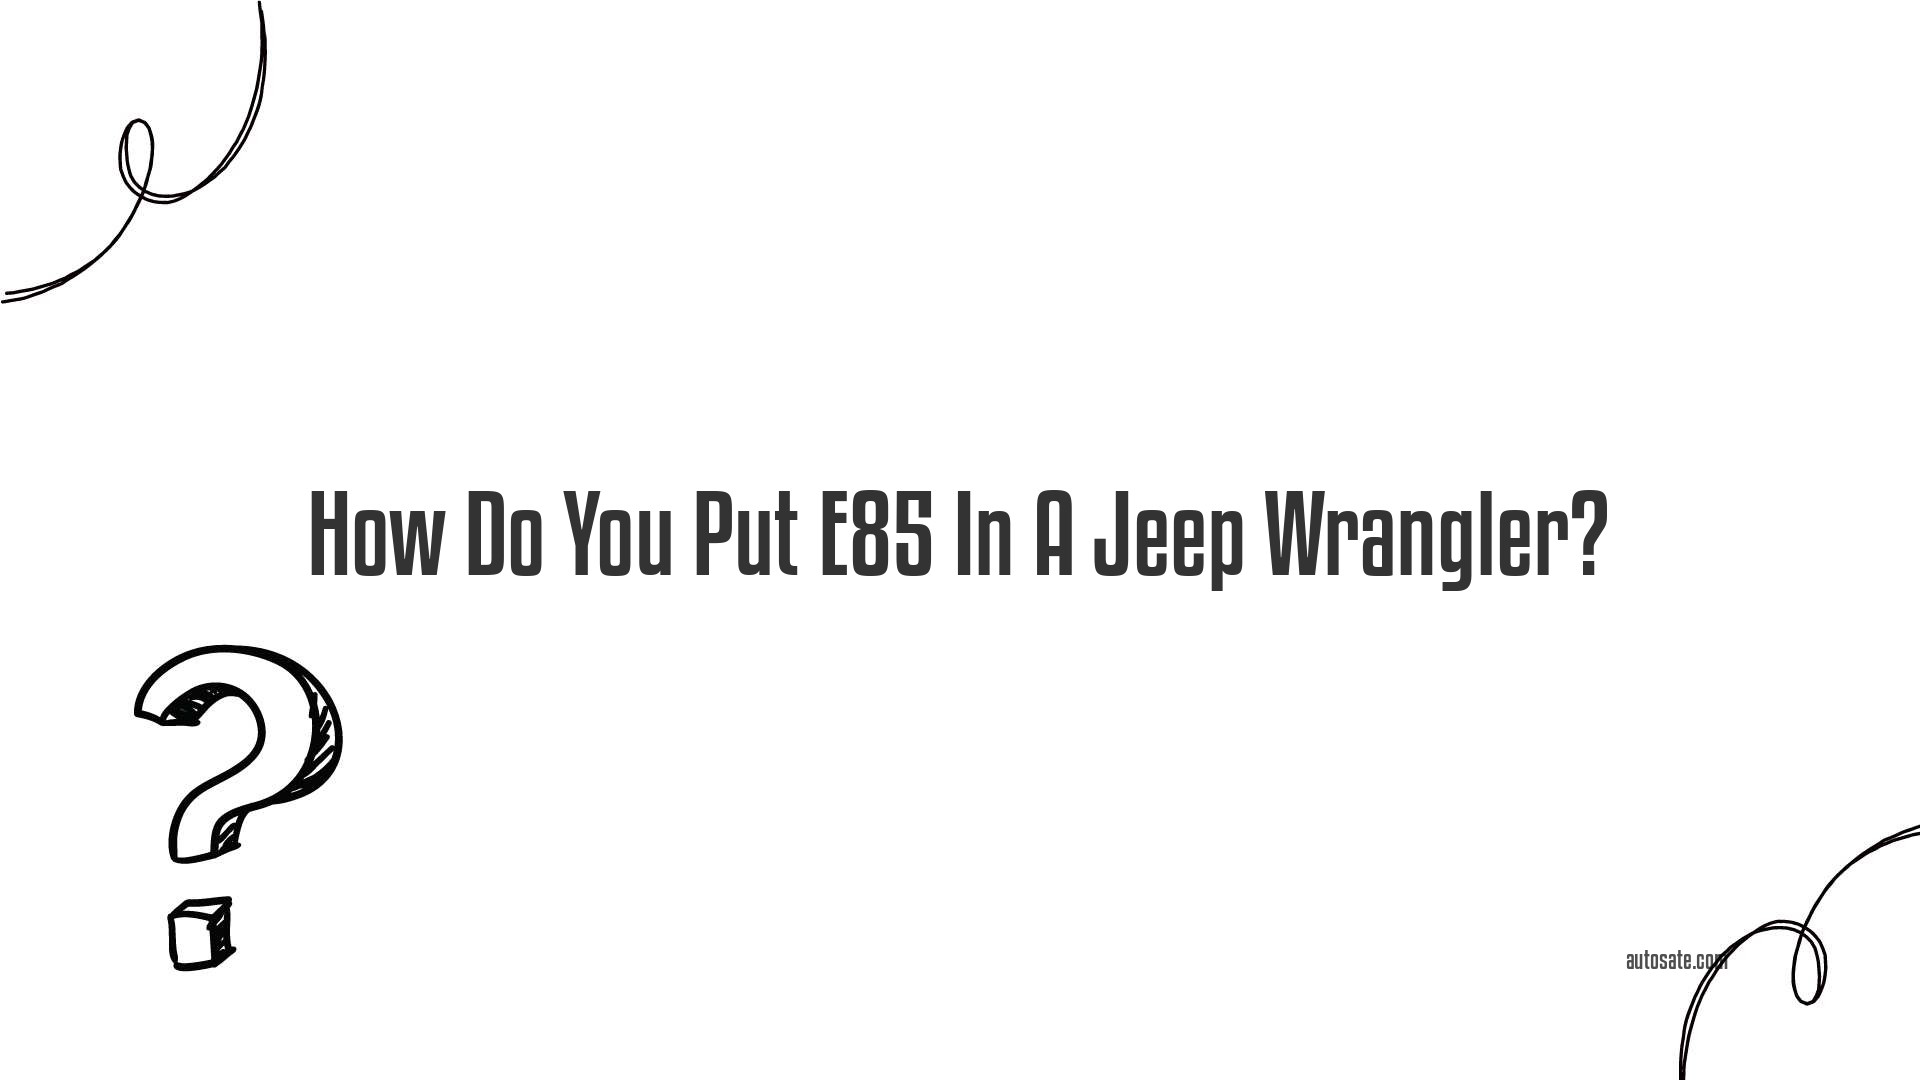 How Do You Put E85 In A Jeep Wrangler?